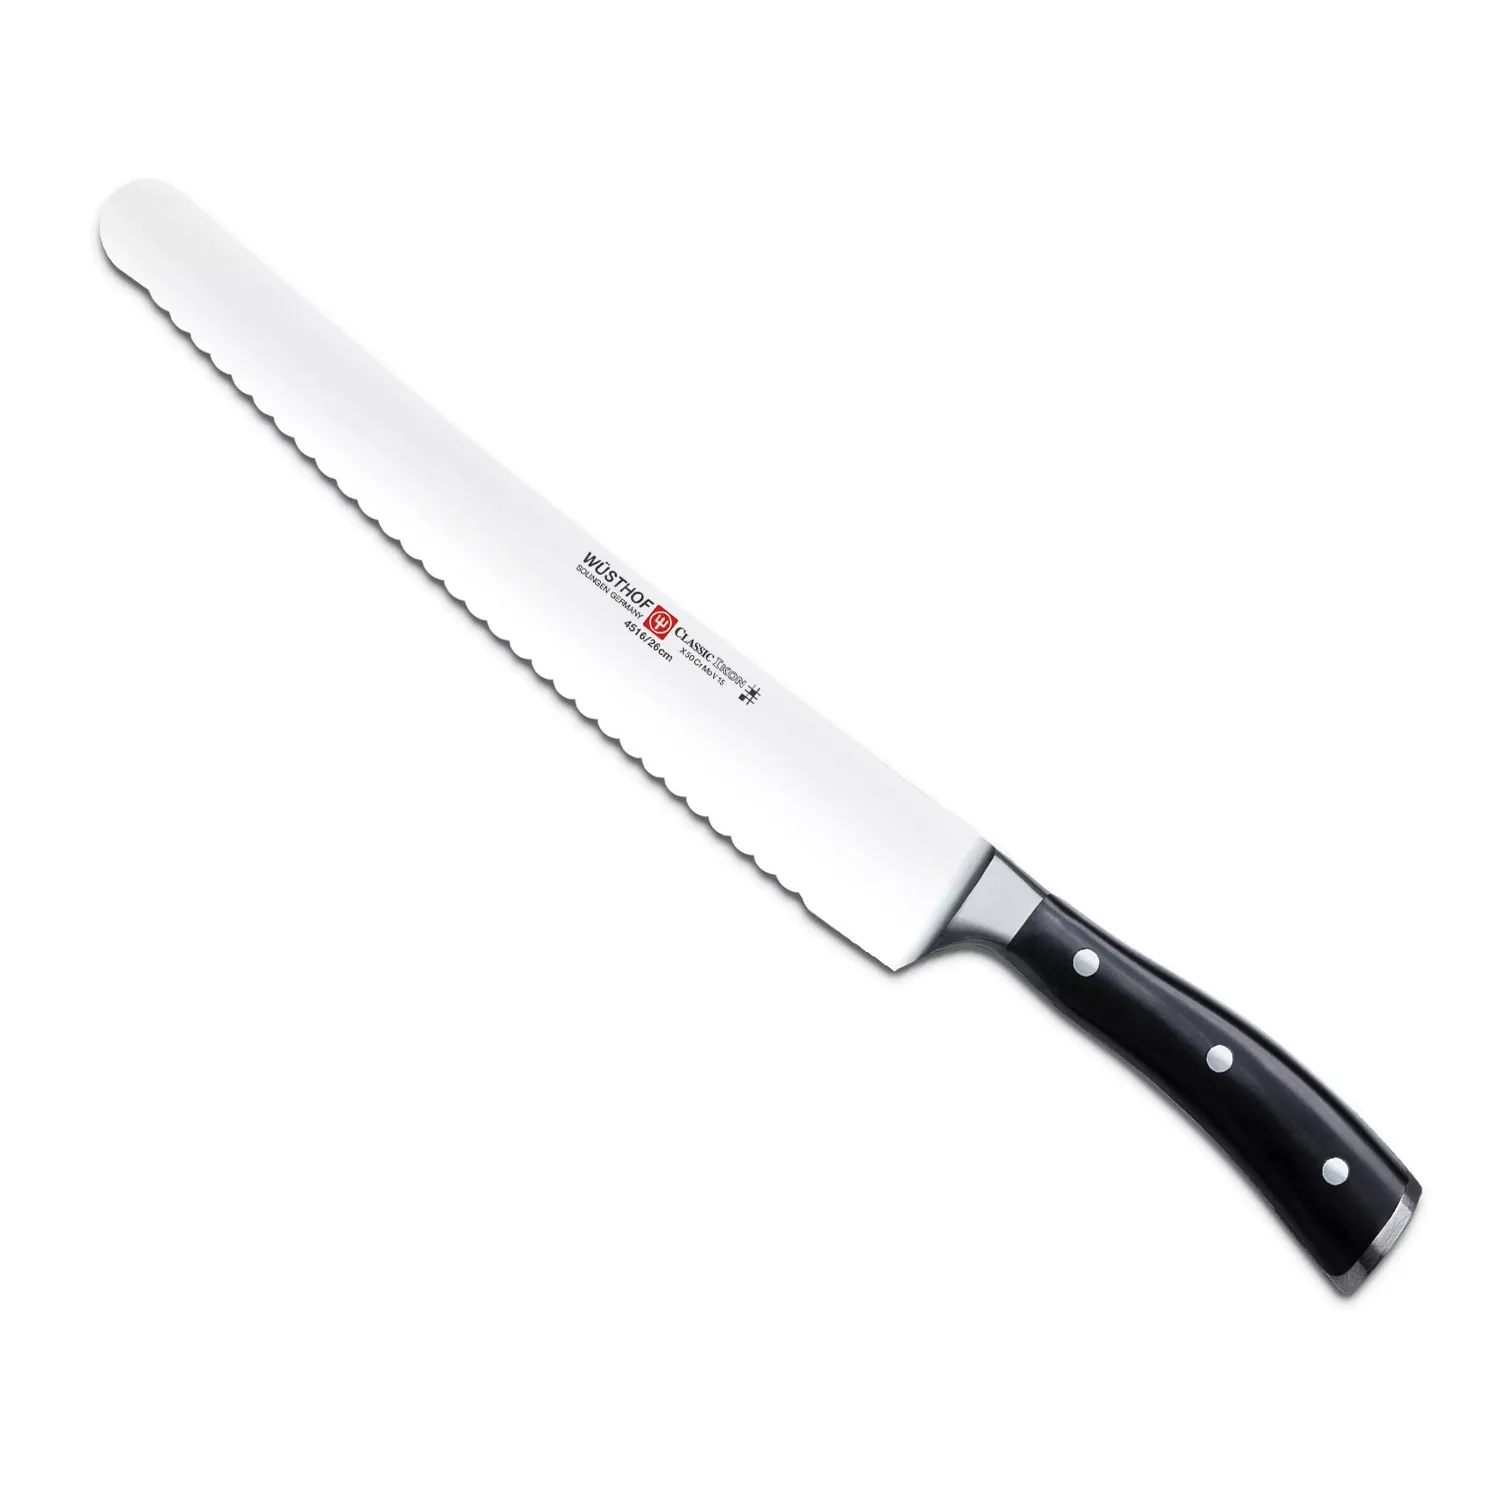 Wusthof Classic 10 Chef's Knife